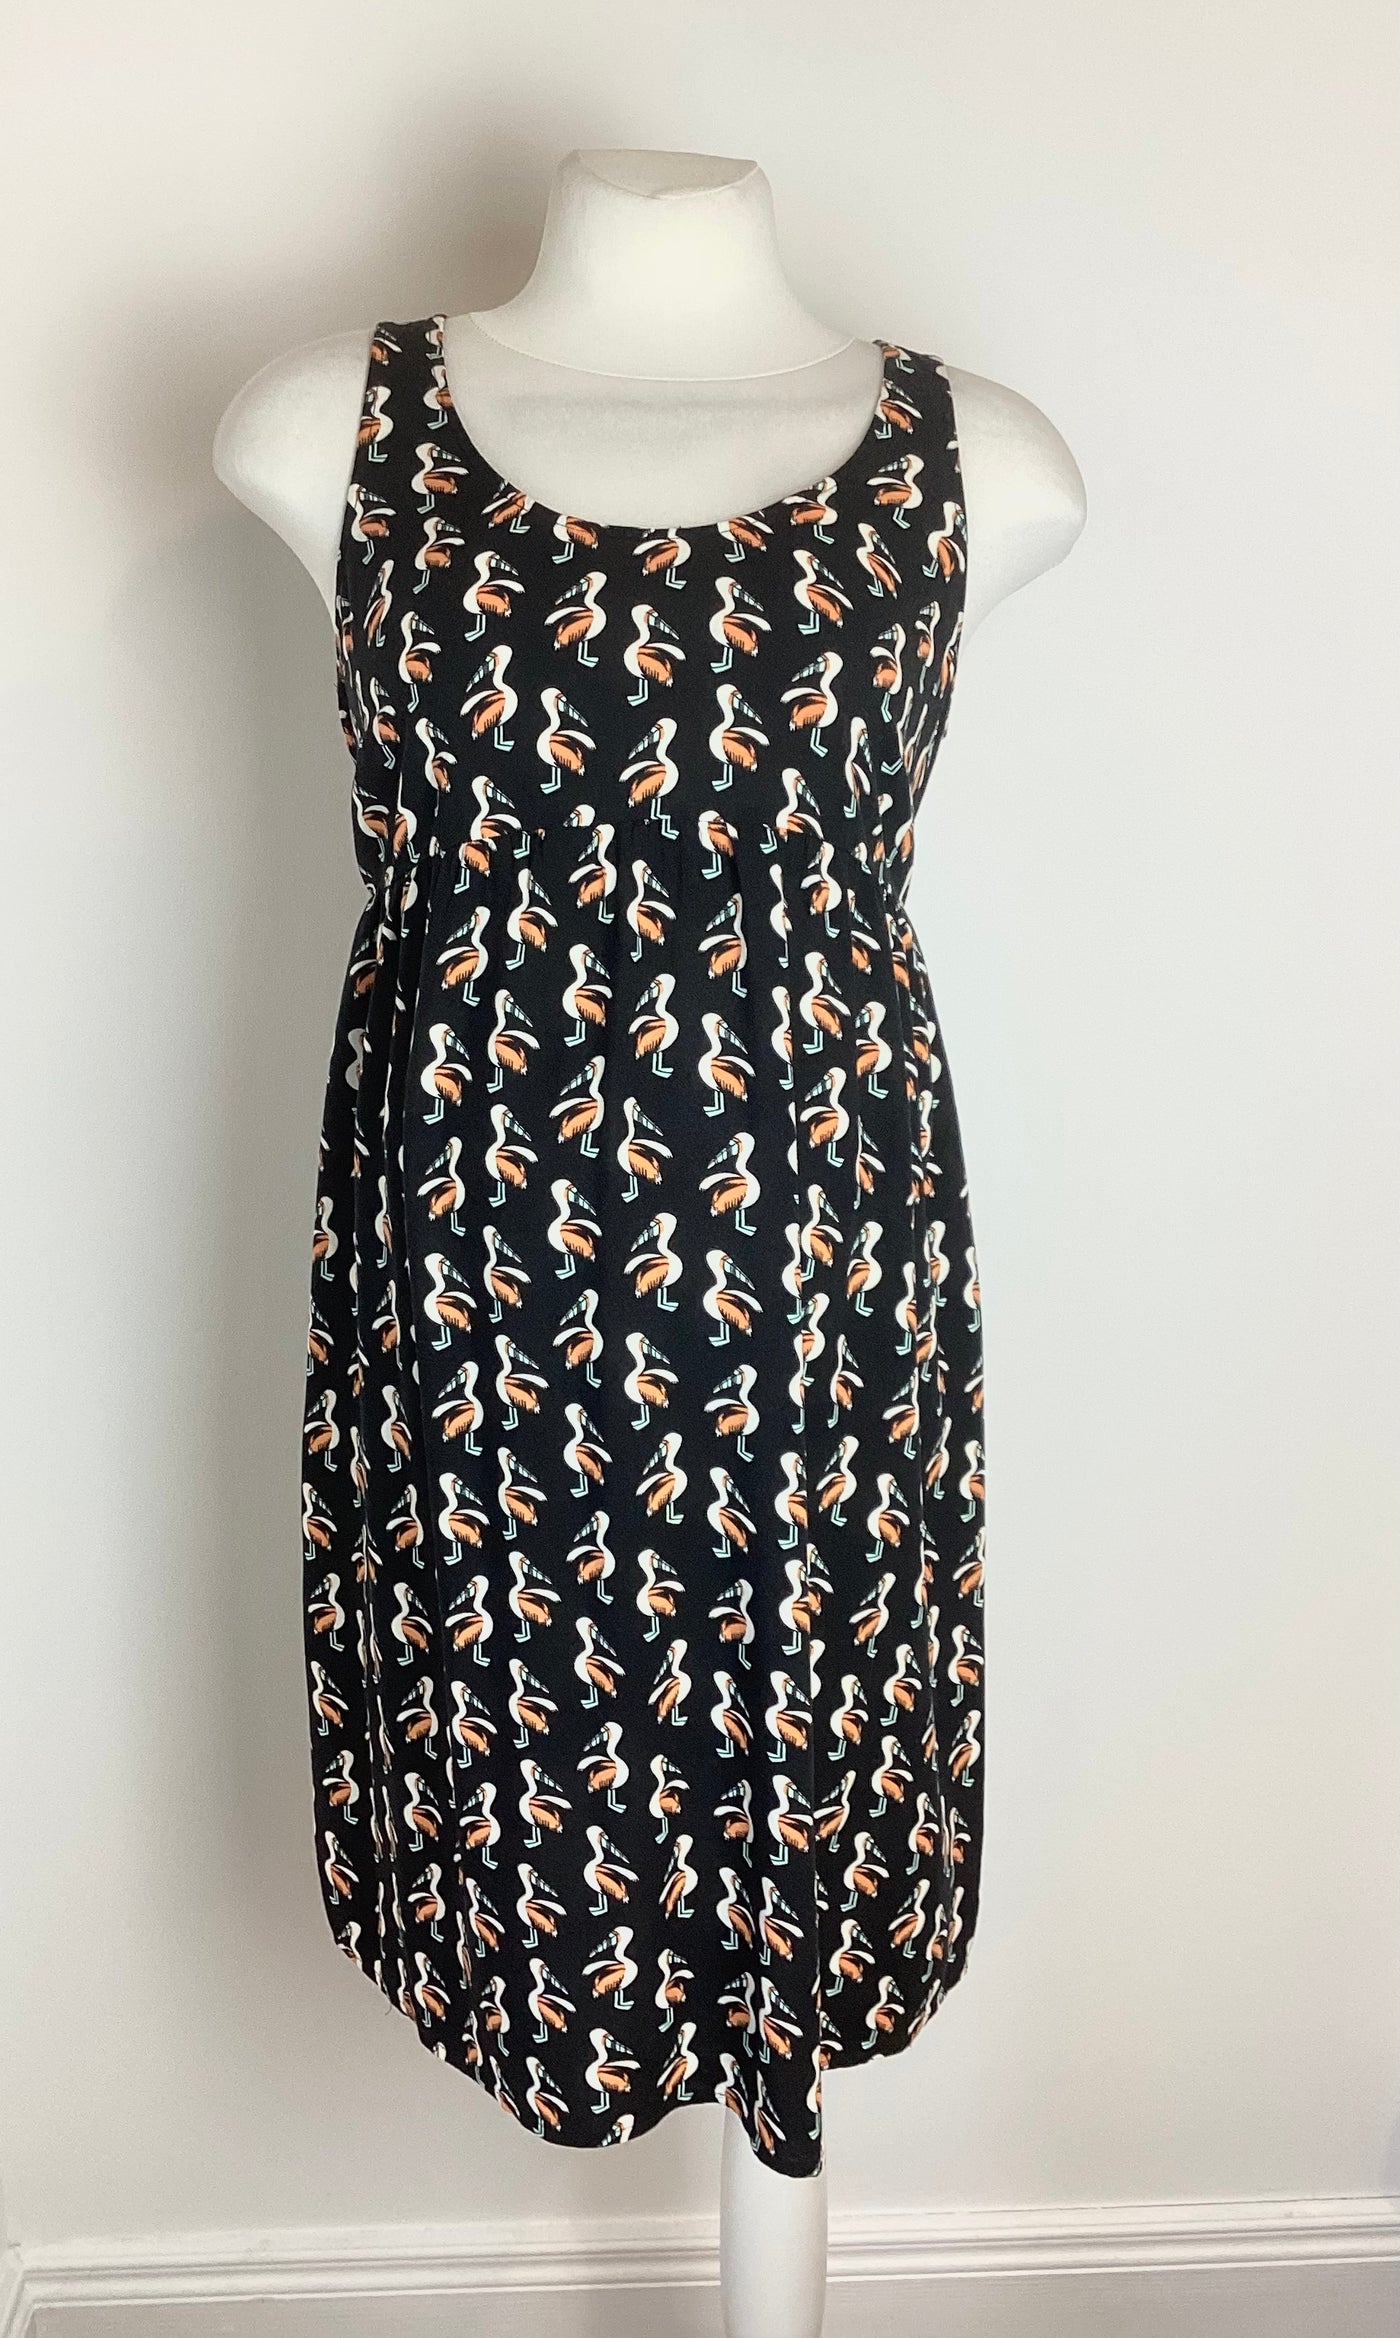 H&M Mama black, orange & white bird print sleeveless dress - Size S (Approx UK 8/10)